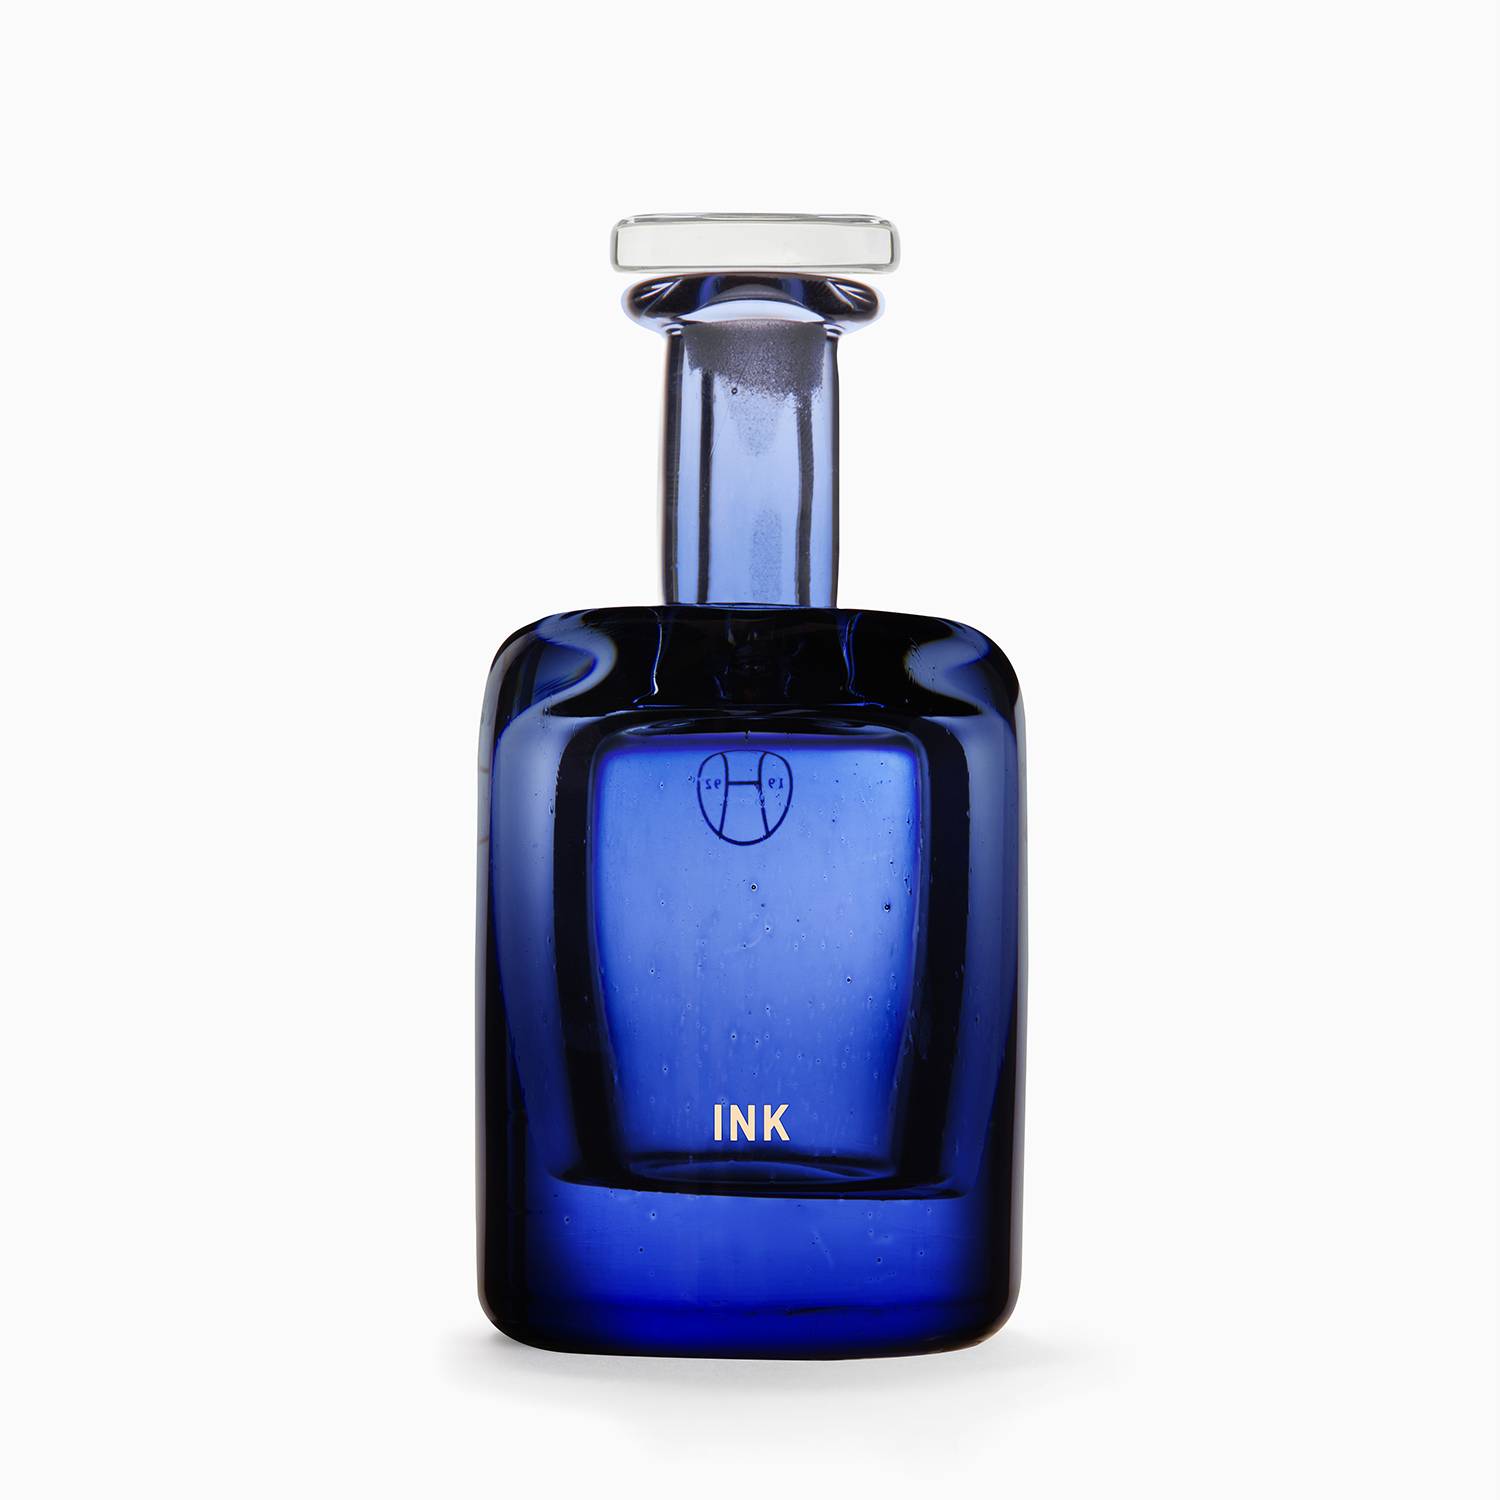 “Ink”, Perfumer H, dans sa version en verre soufflé 